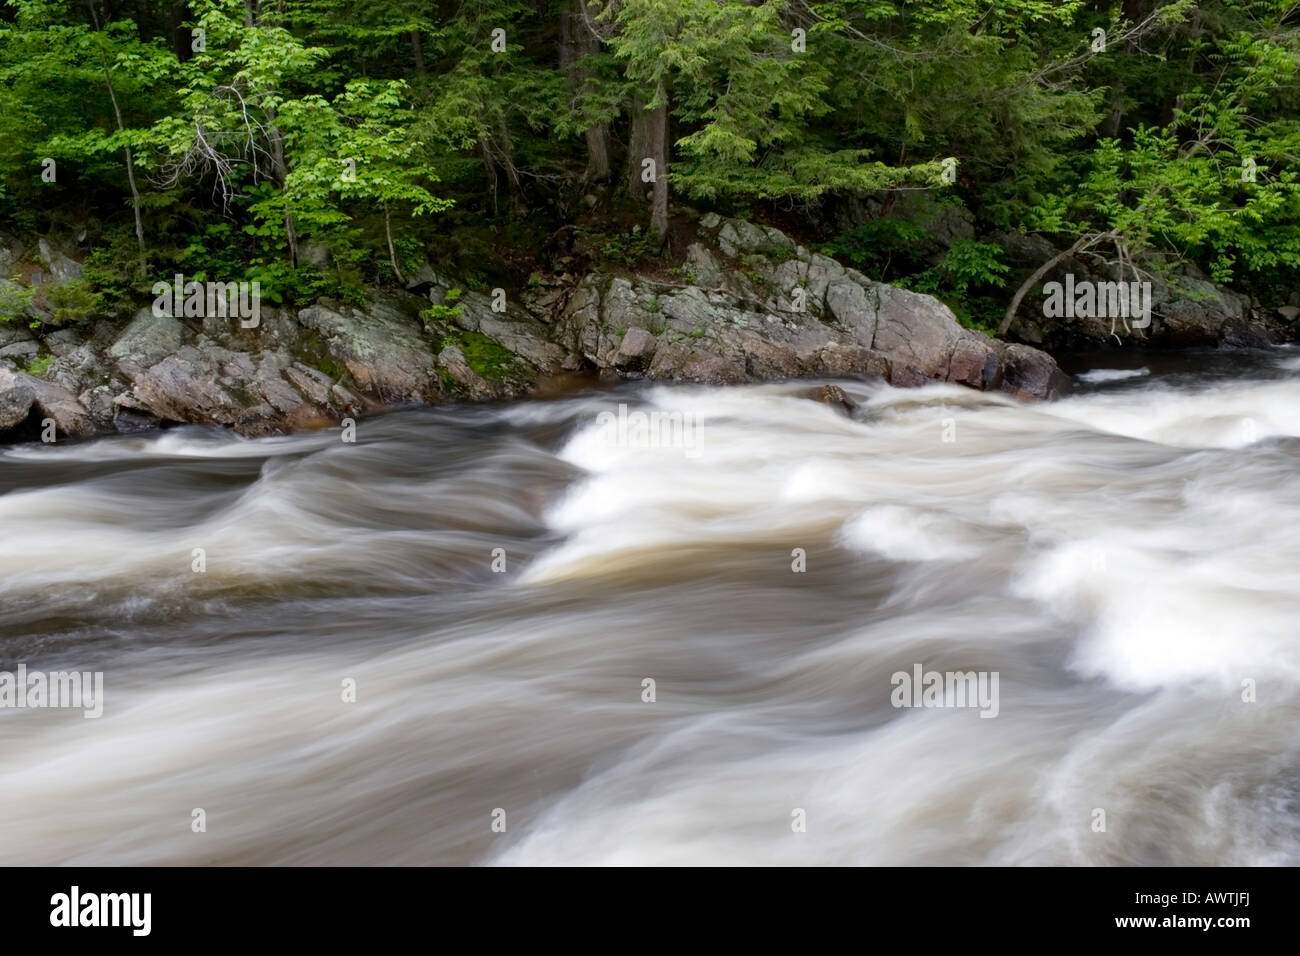 Rushing river, Adirondack Mountains, New York, United States Stock Photo